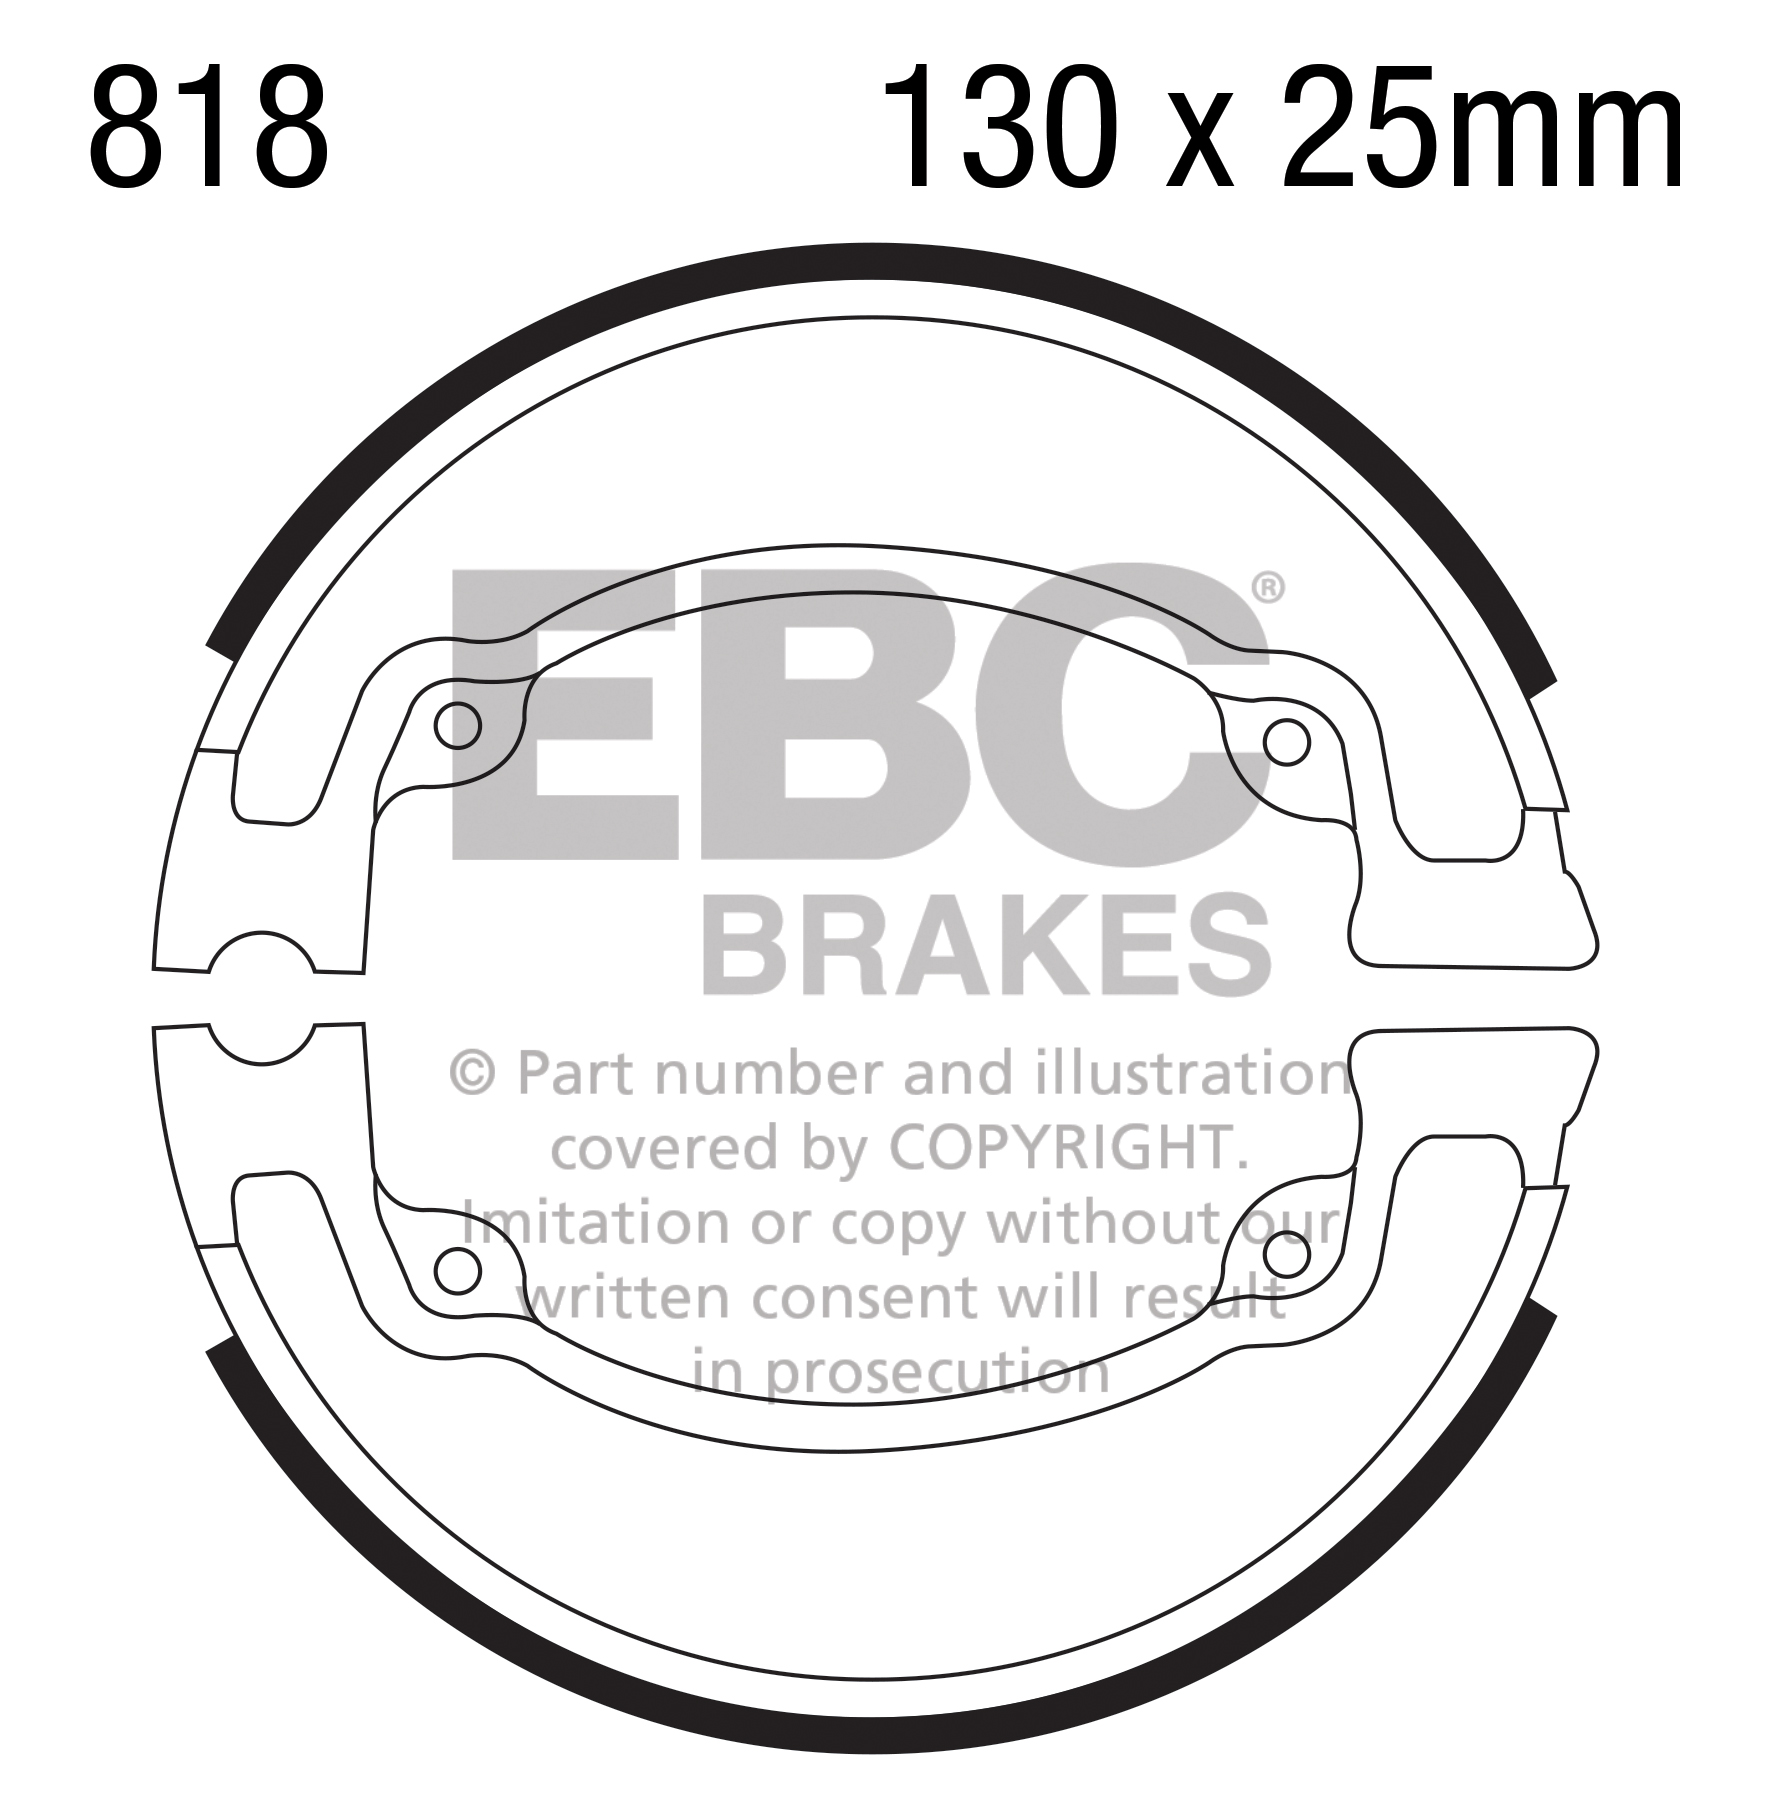 EBC Plain Motorcycle Replacement Brake Shoes